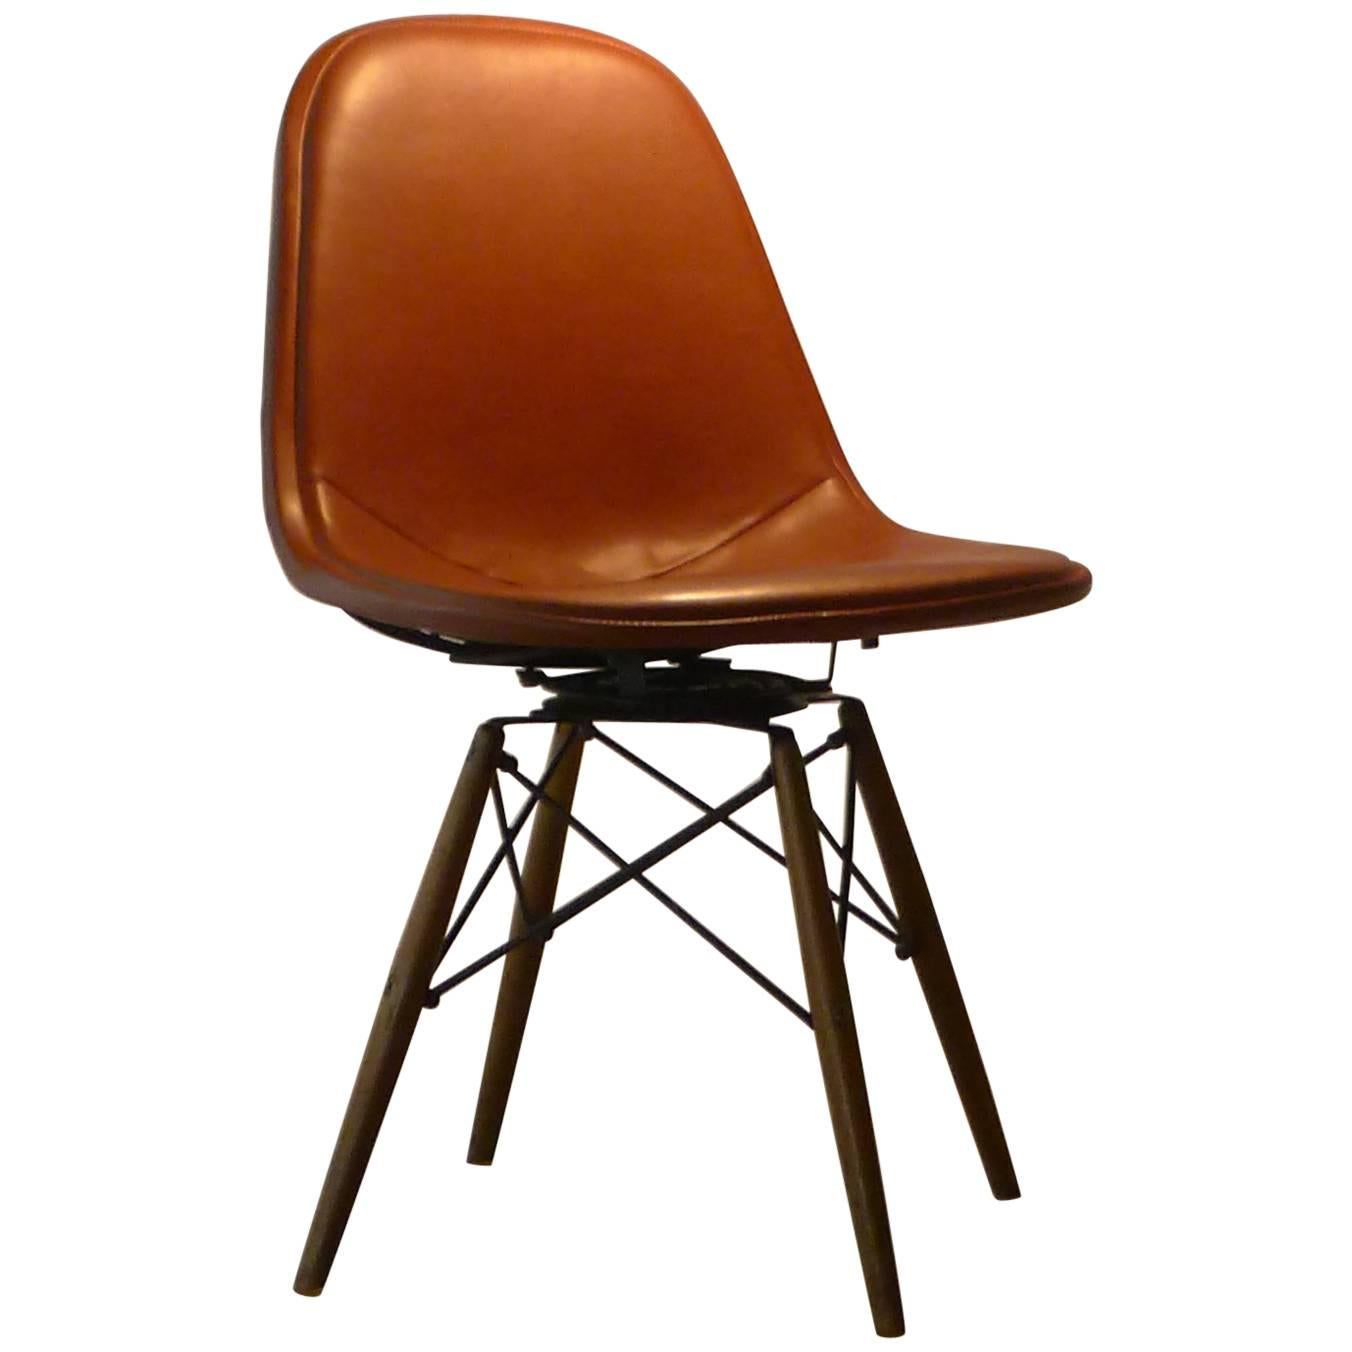 Charles & Ray Eames Swivel Dowel Legged Chair; Dkw-1 , Vintage Herman Miller